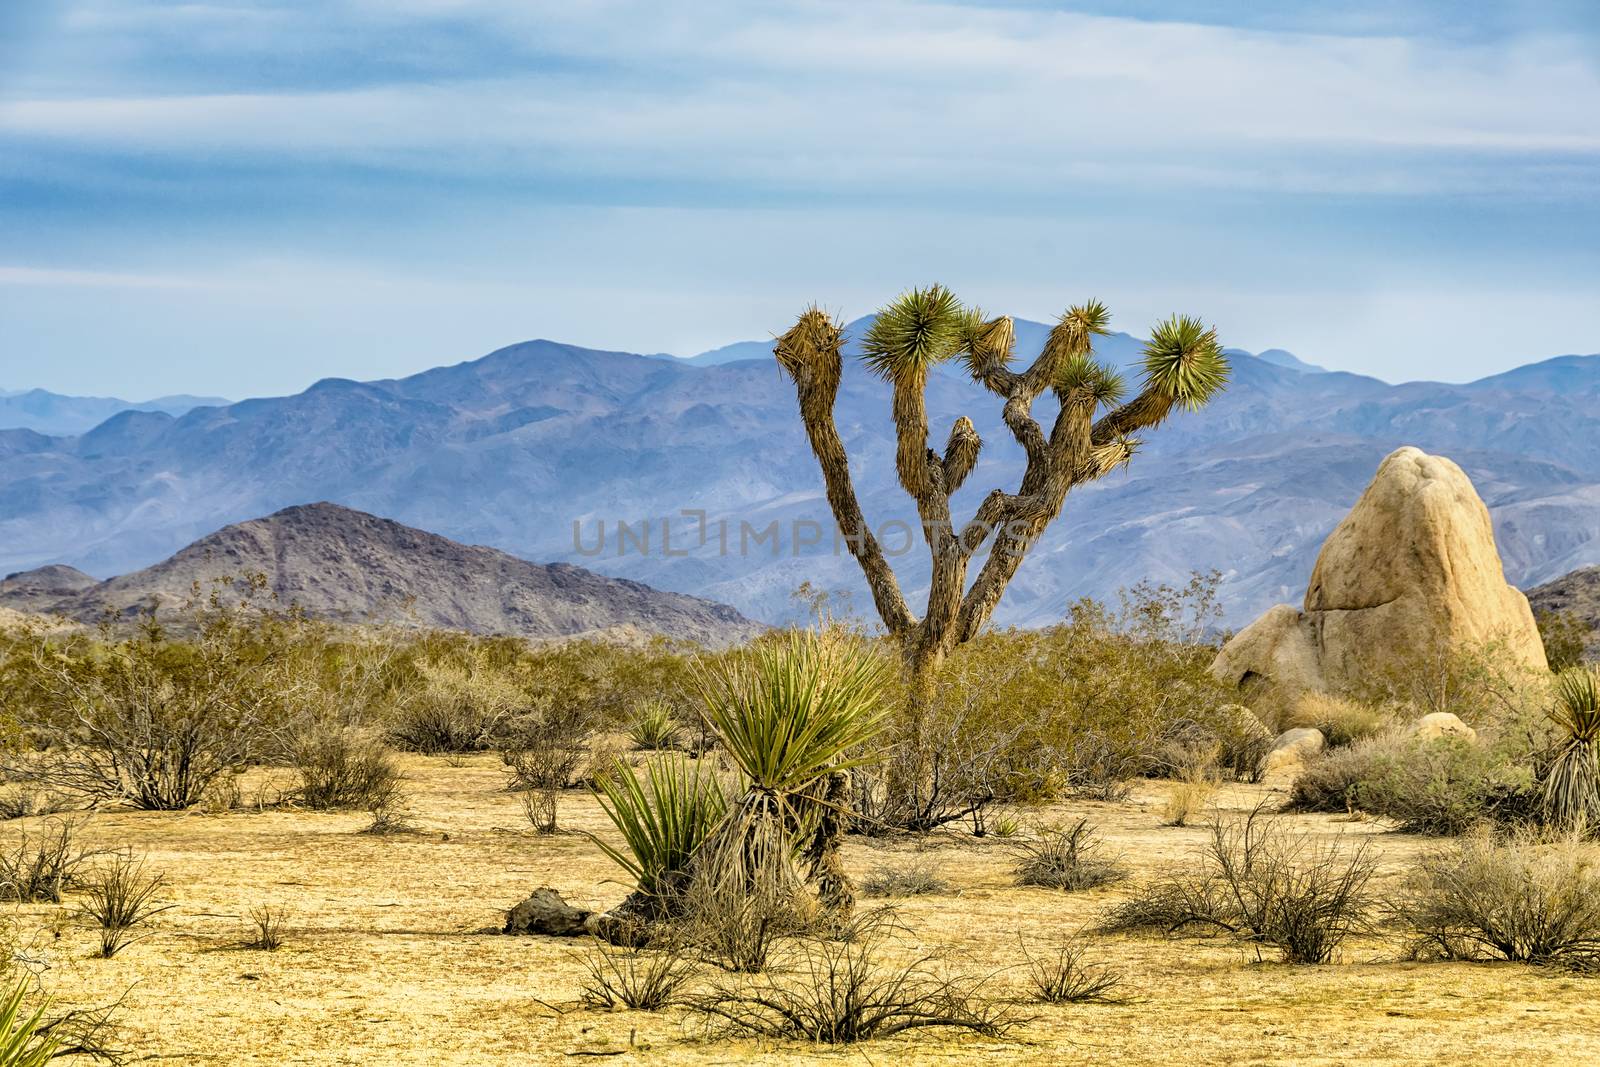 Joshua Tree, or Yucca brevifolia, native to the arid southwestern United States.